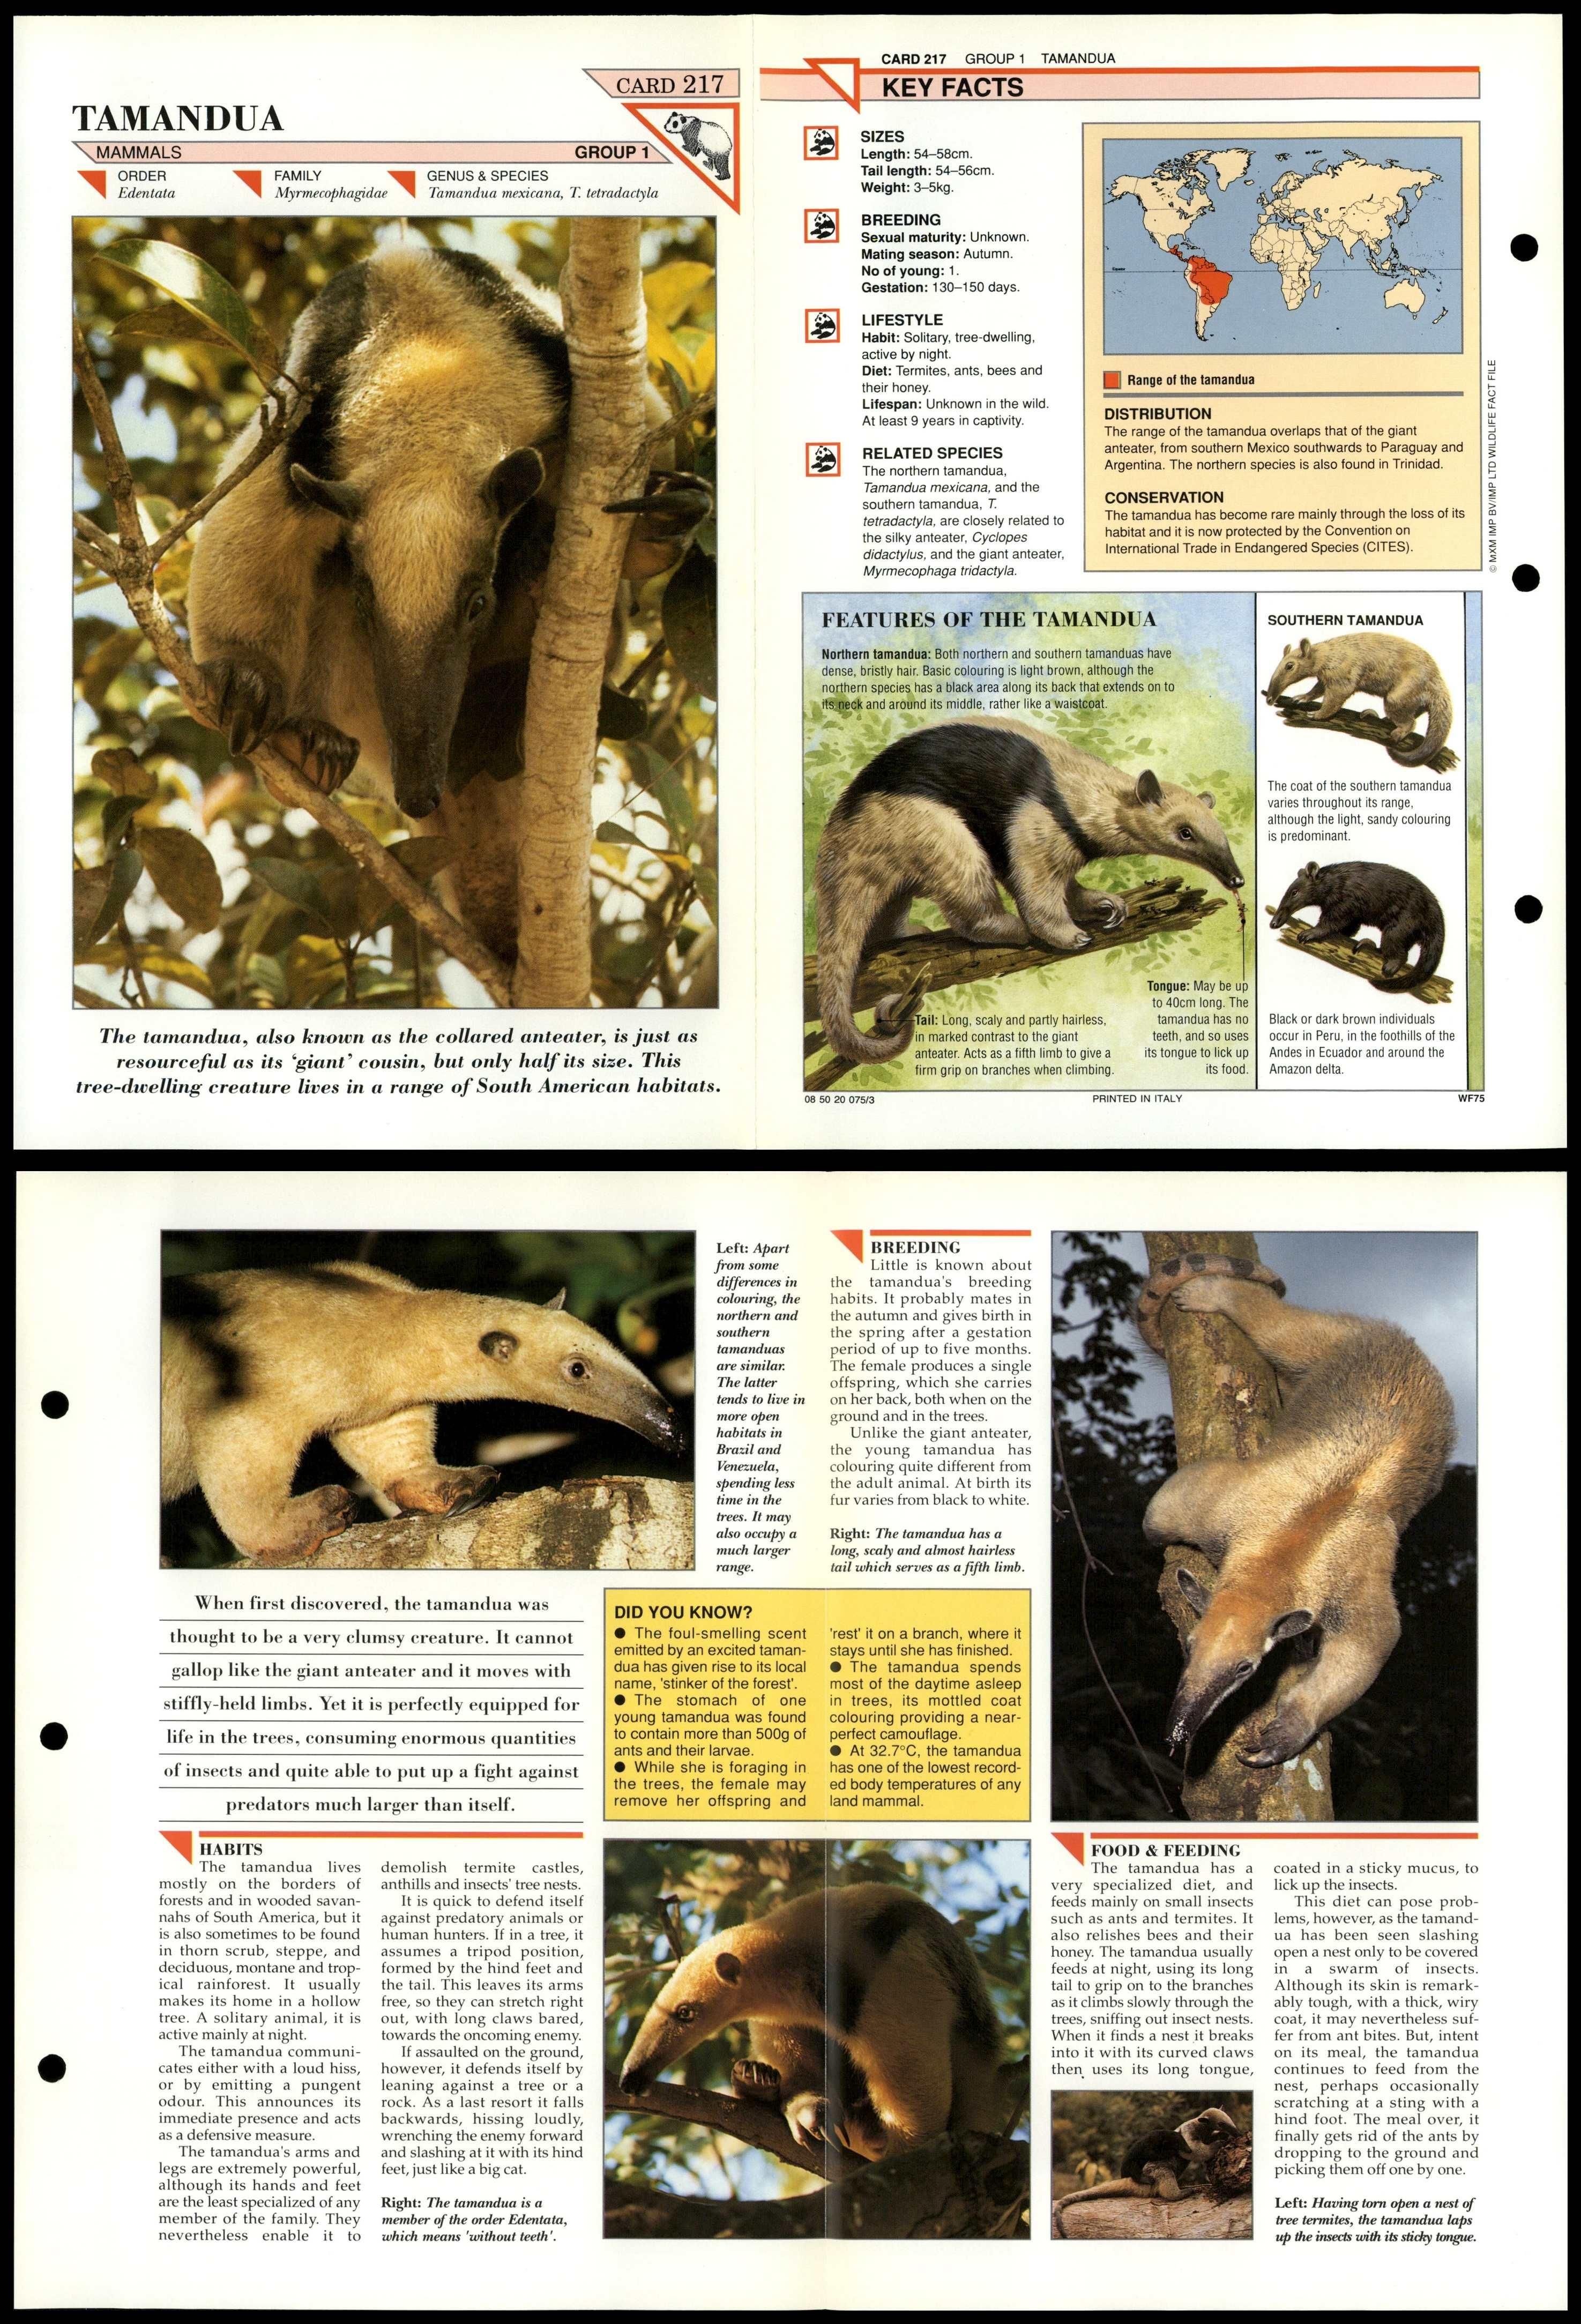 Tamandua #217 Mammals Wildlife Fact File Fold-Out Card